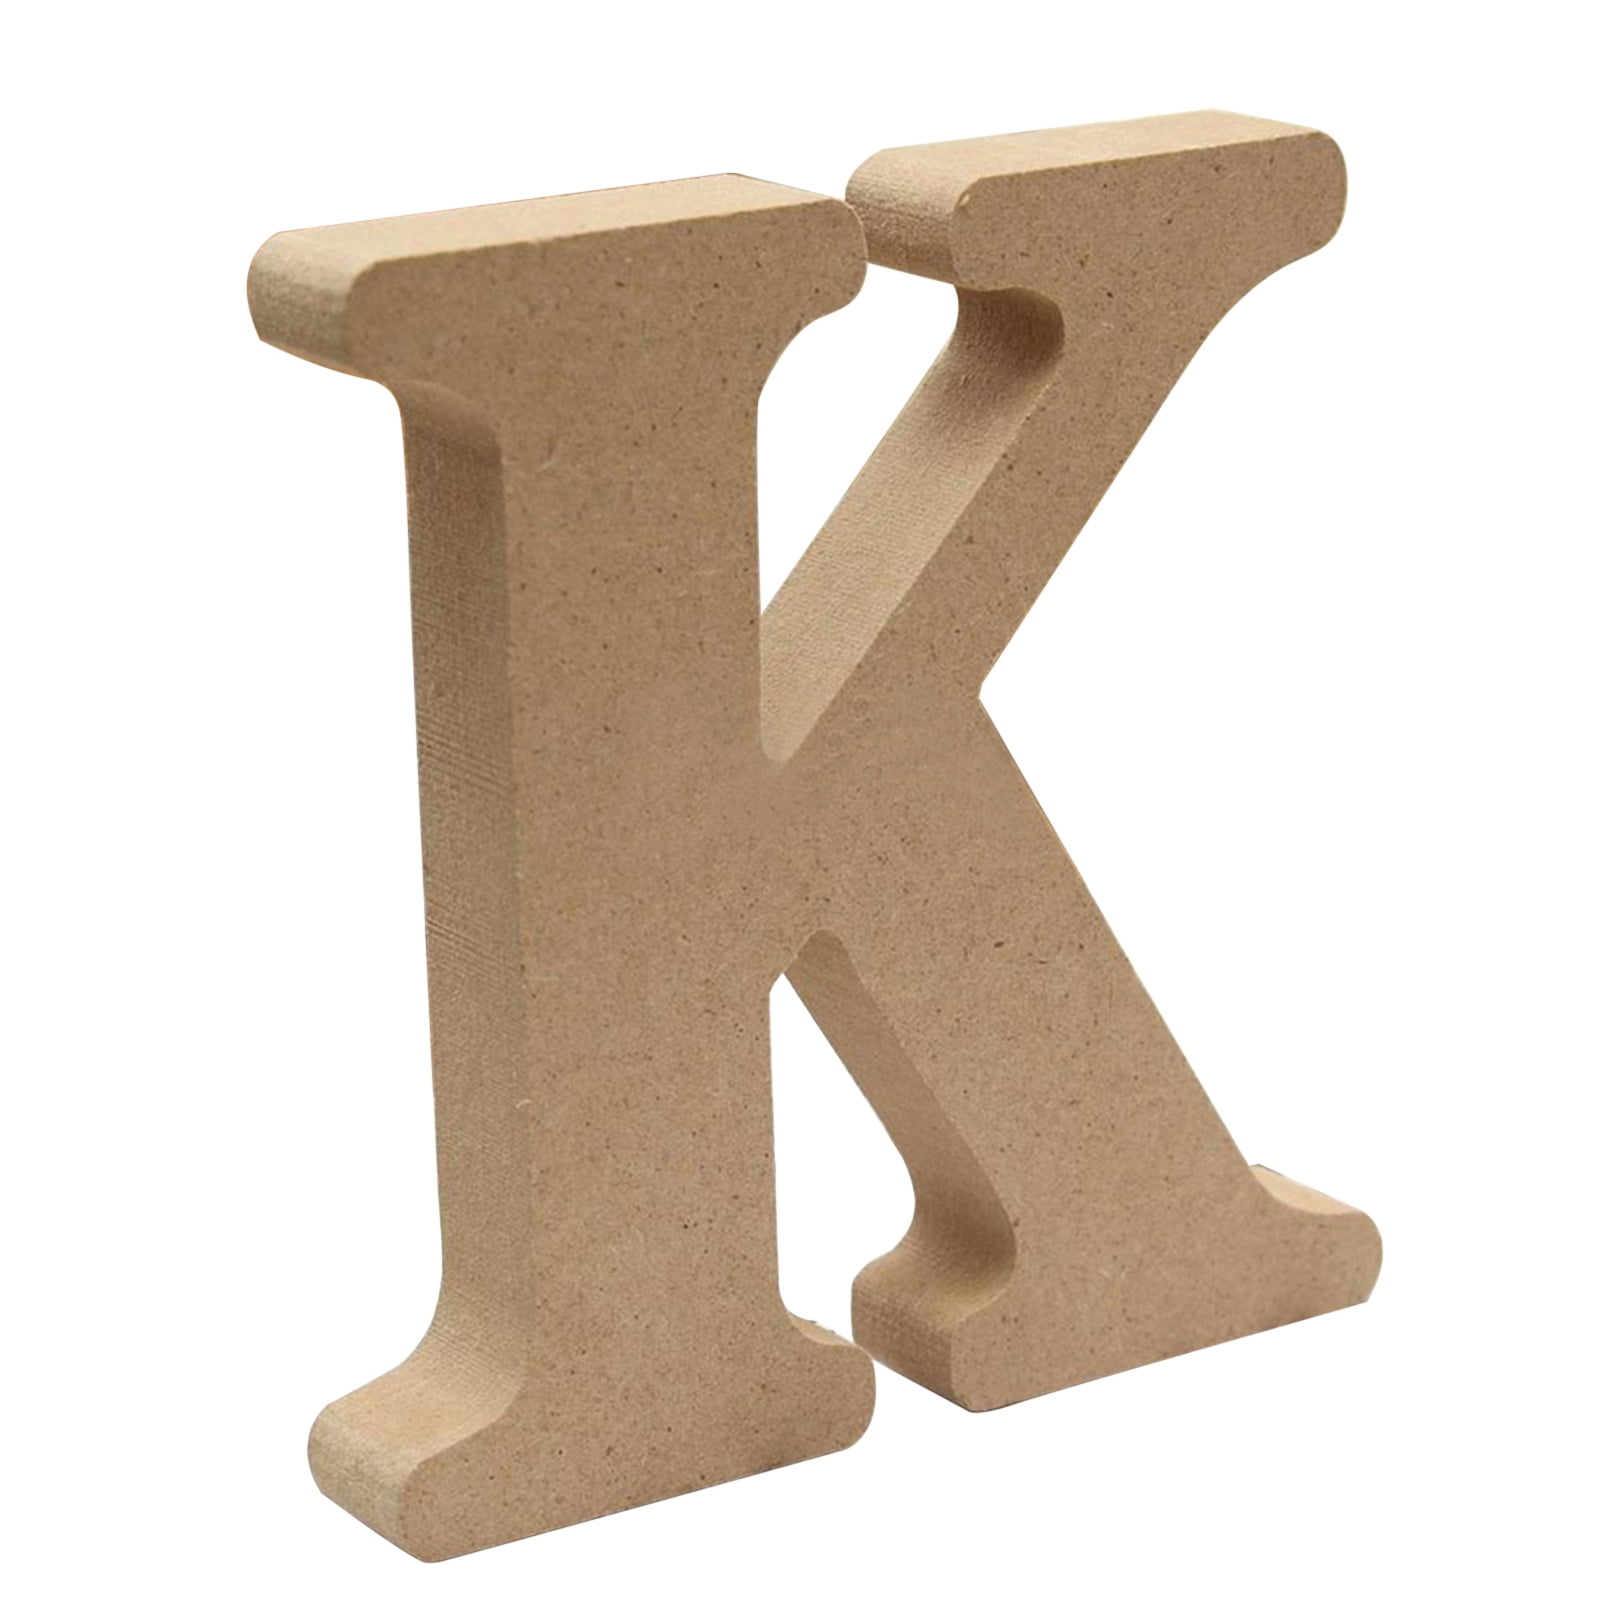 visland-4-inch-designable-wood-letters-unfinished-wood-letters-for